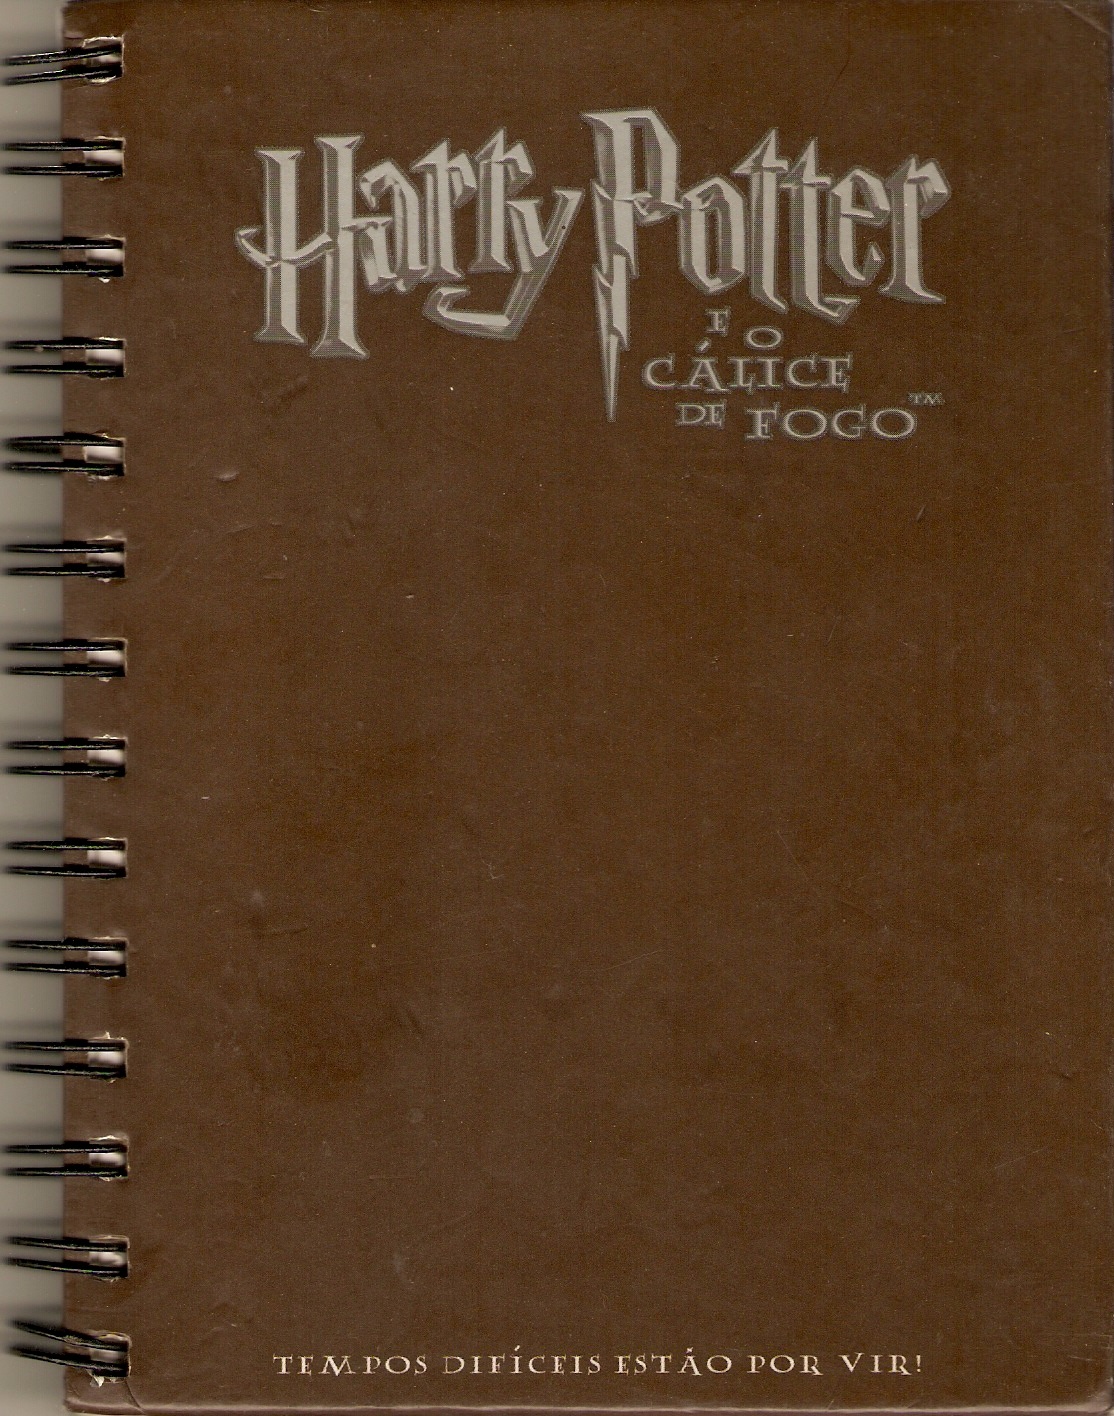 Harry Potter e o Clice de Fogo Wikipdia, a